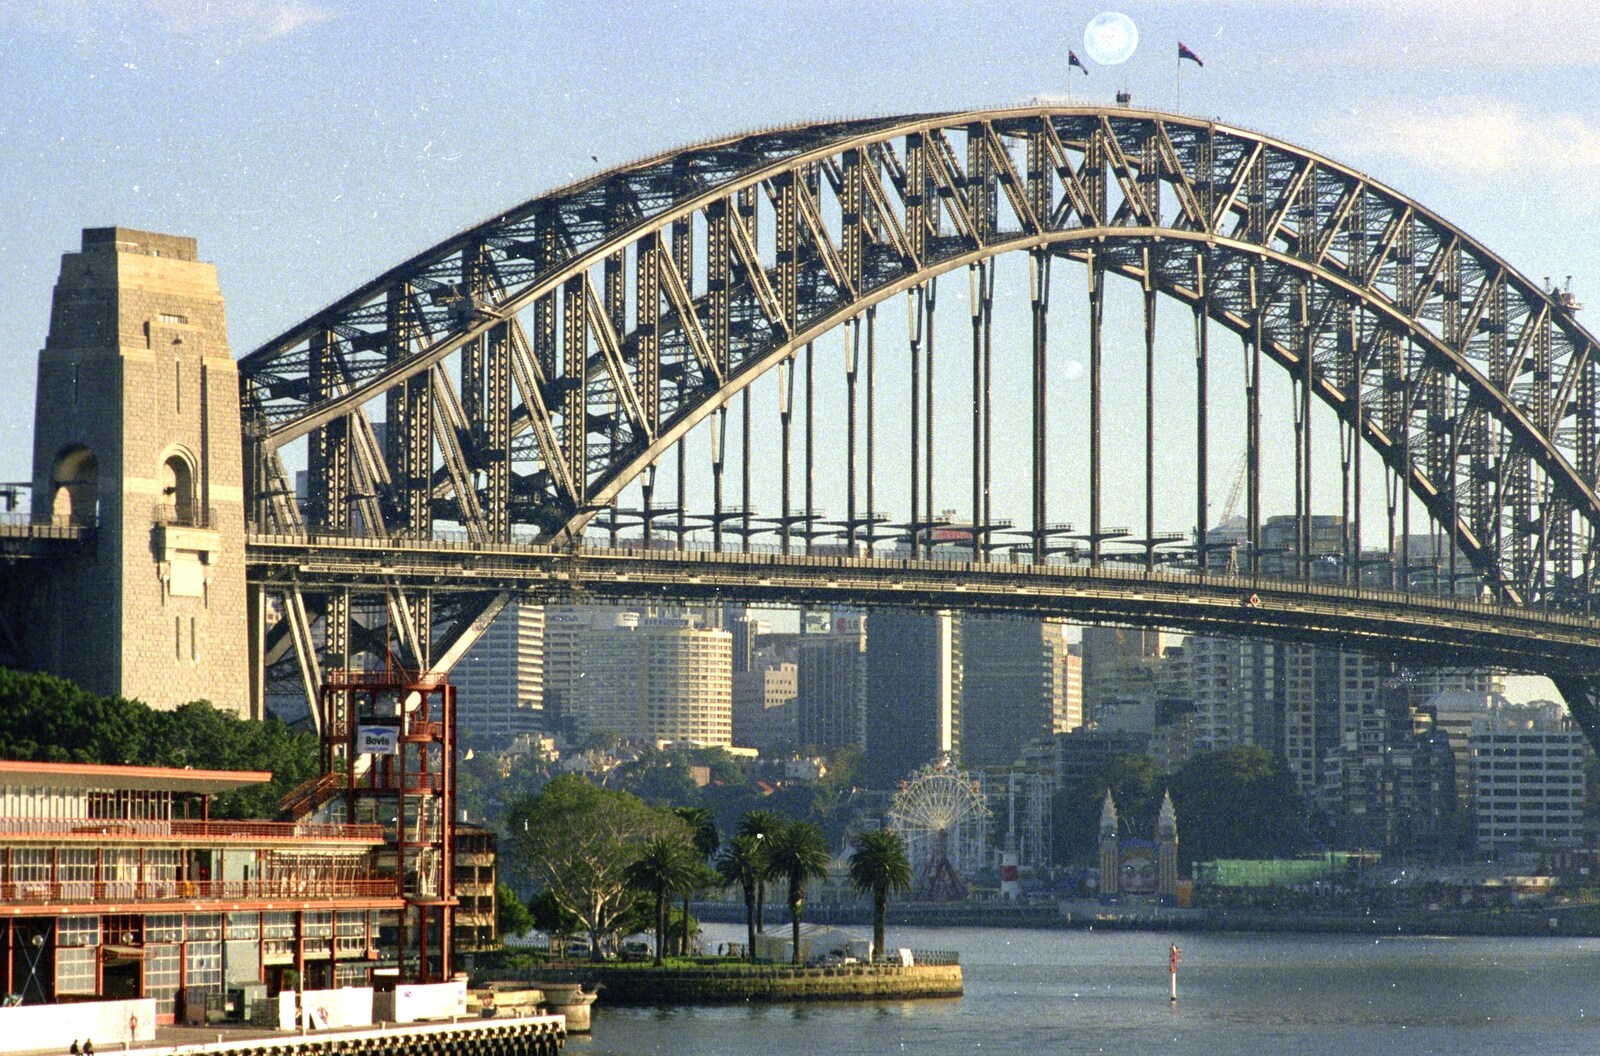 Sydney Harbour Bridge from A Trip to the Zoo, Sydney, Australia - 7th April 2000